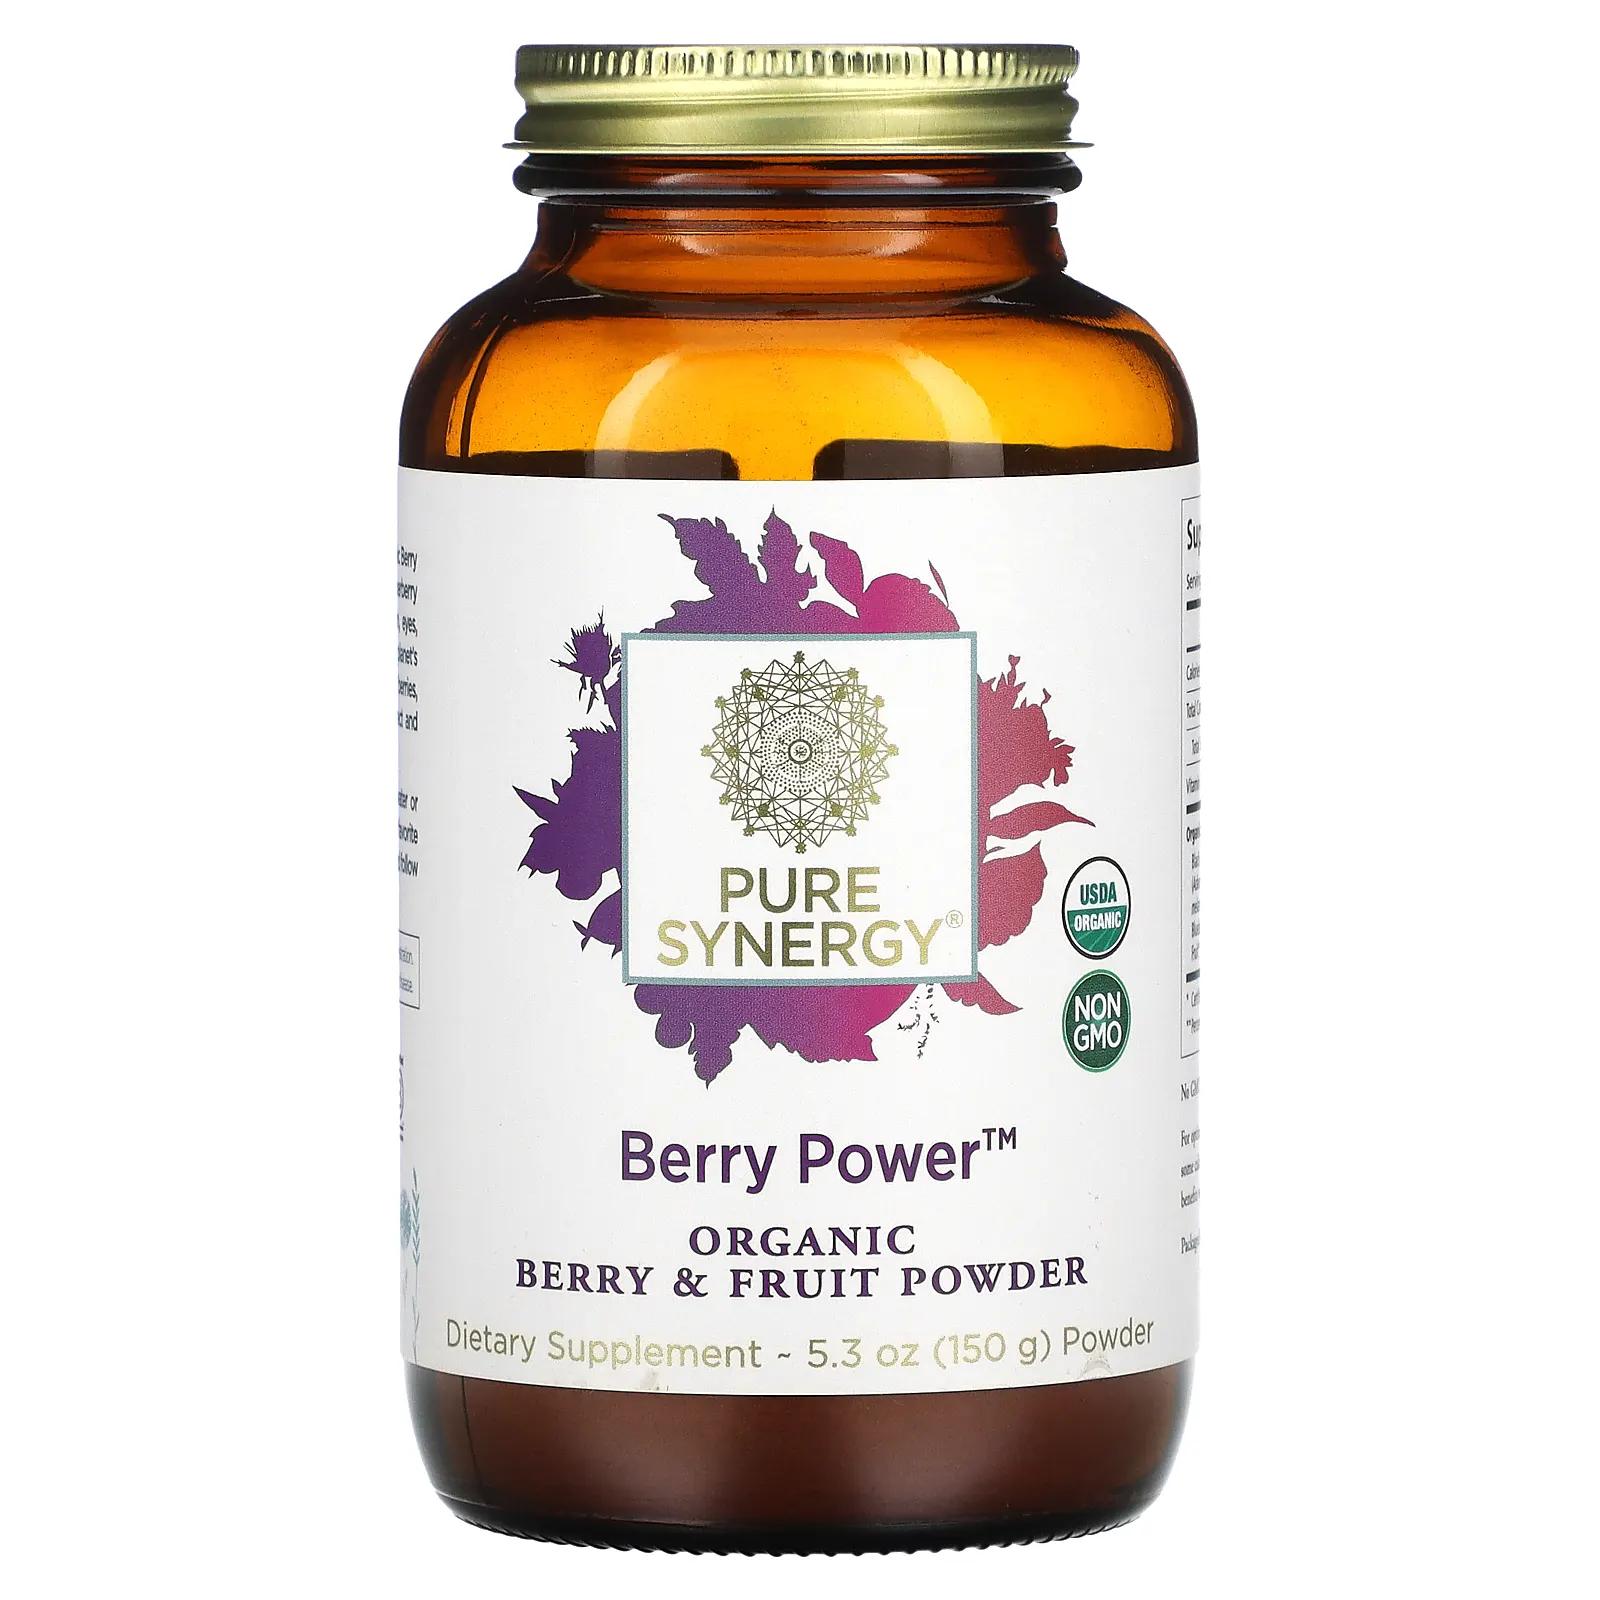 synergy lab dog wash puppy pure Pure Synergy Berry Power Organic Berry & Fruit Powder 5.3 oz (150 g)